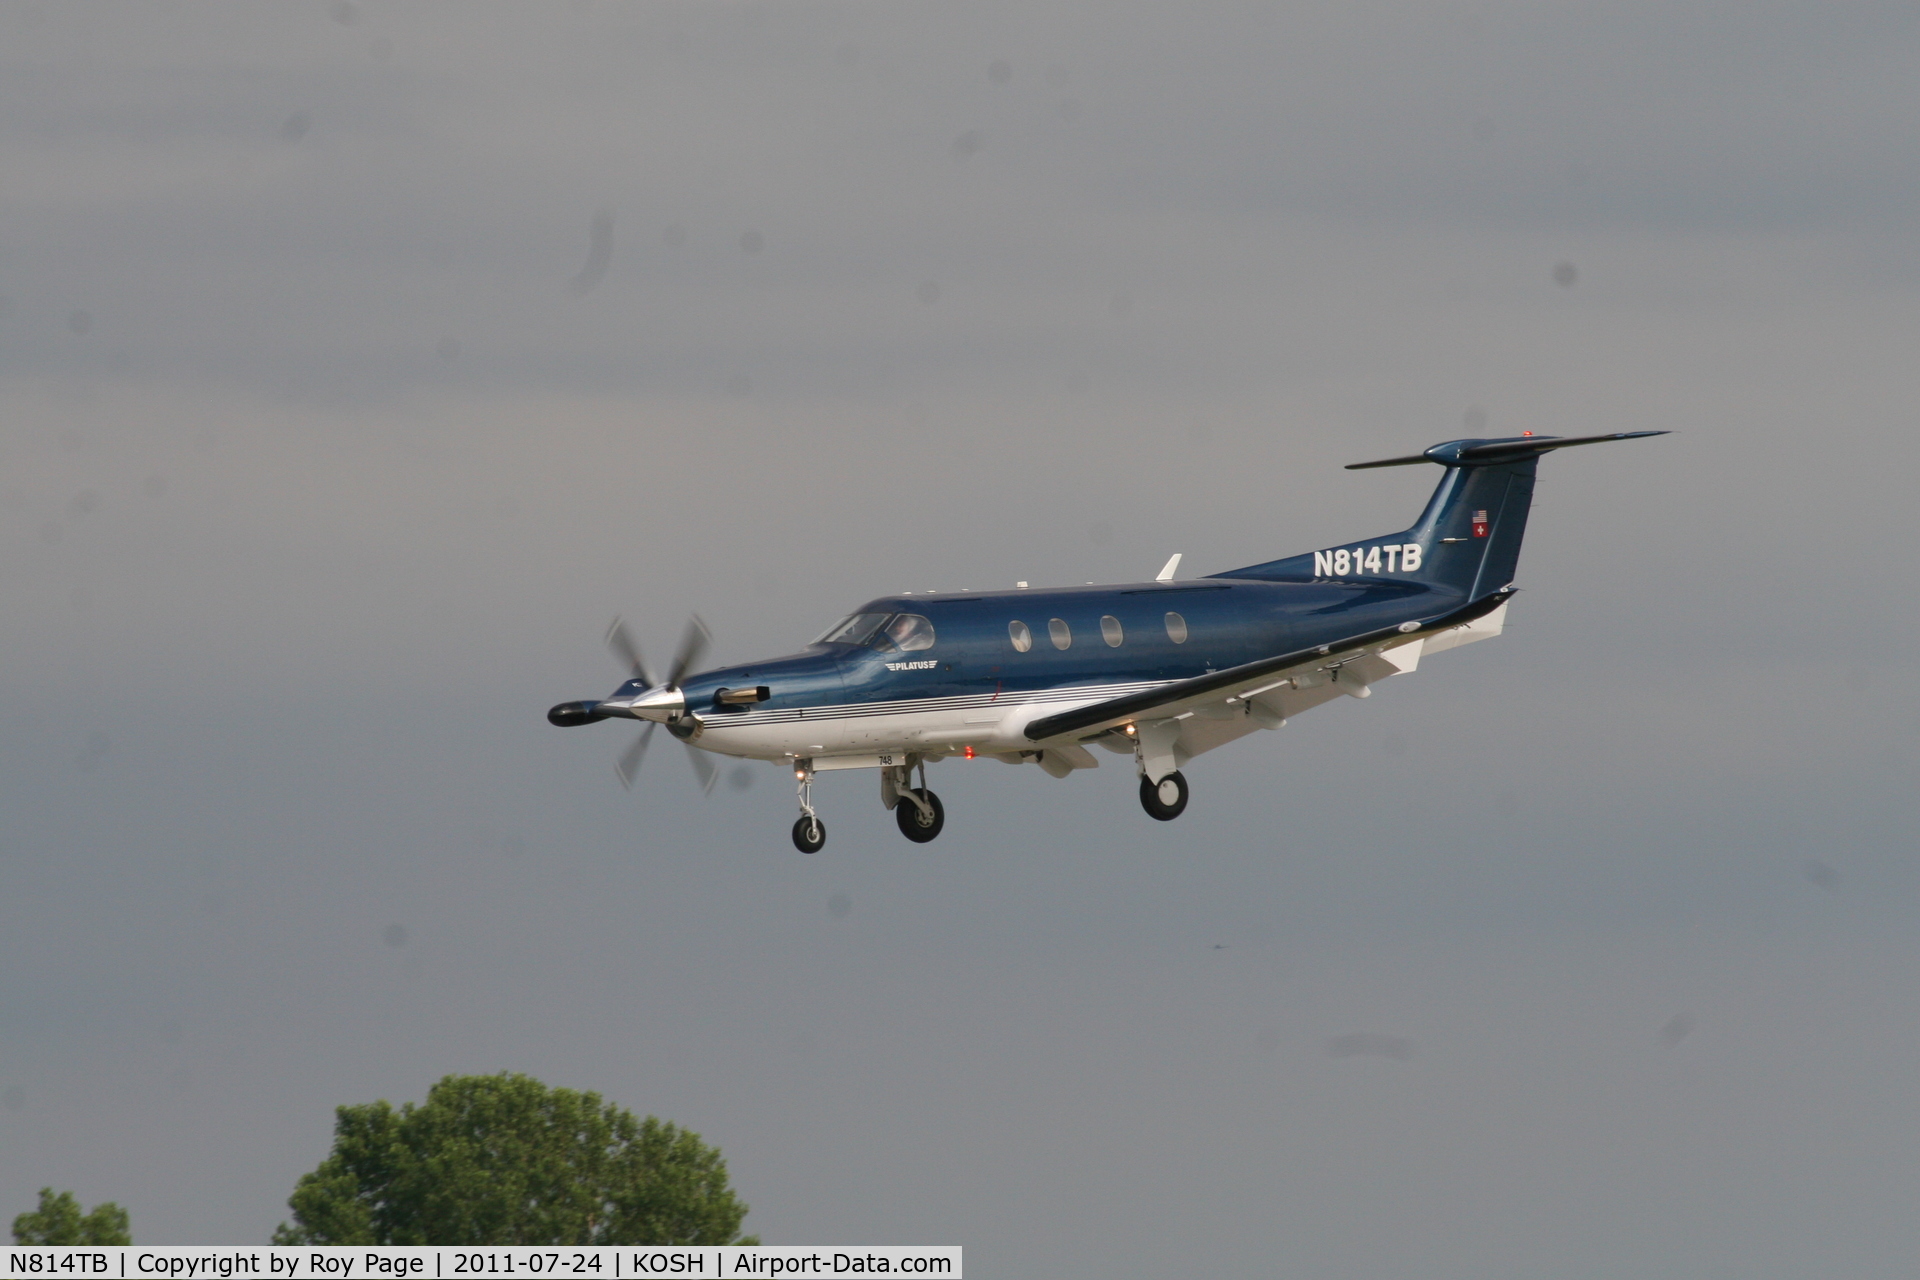 N814TB, 2006 Pilatus PC-12/47 C/N 748, N814TB arriving at Oshkosh at 5:30PM on 24th July 2011 using runway 36.